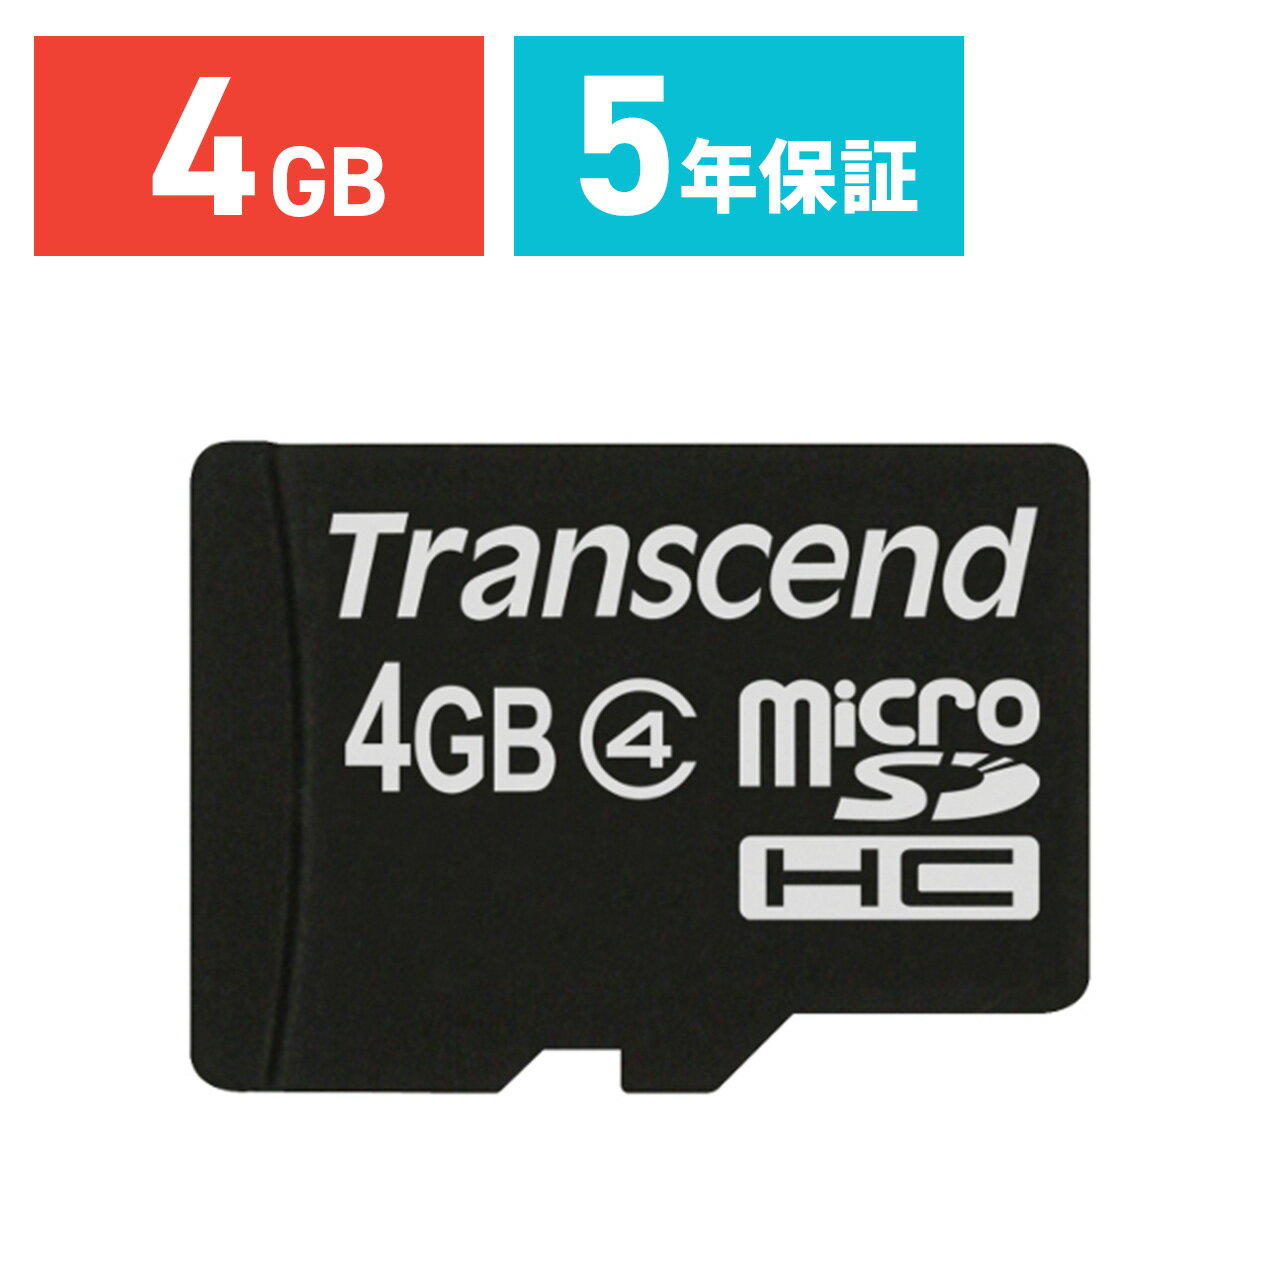 Transcend microSDカード 4GB Class4 永久保証 マイクロSD microS...:sanwadirect:10056927